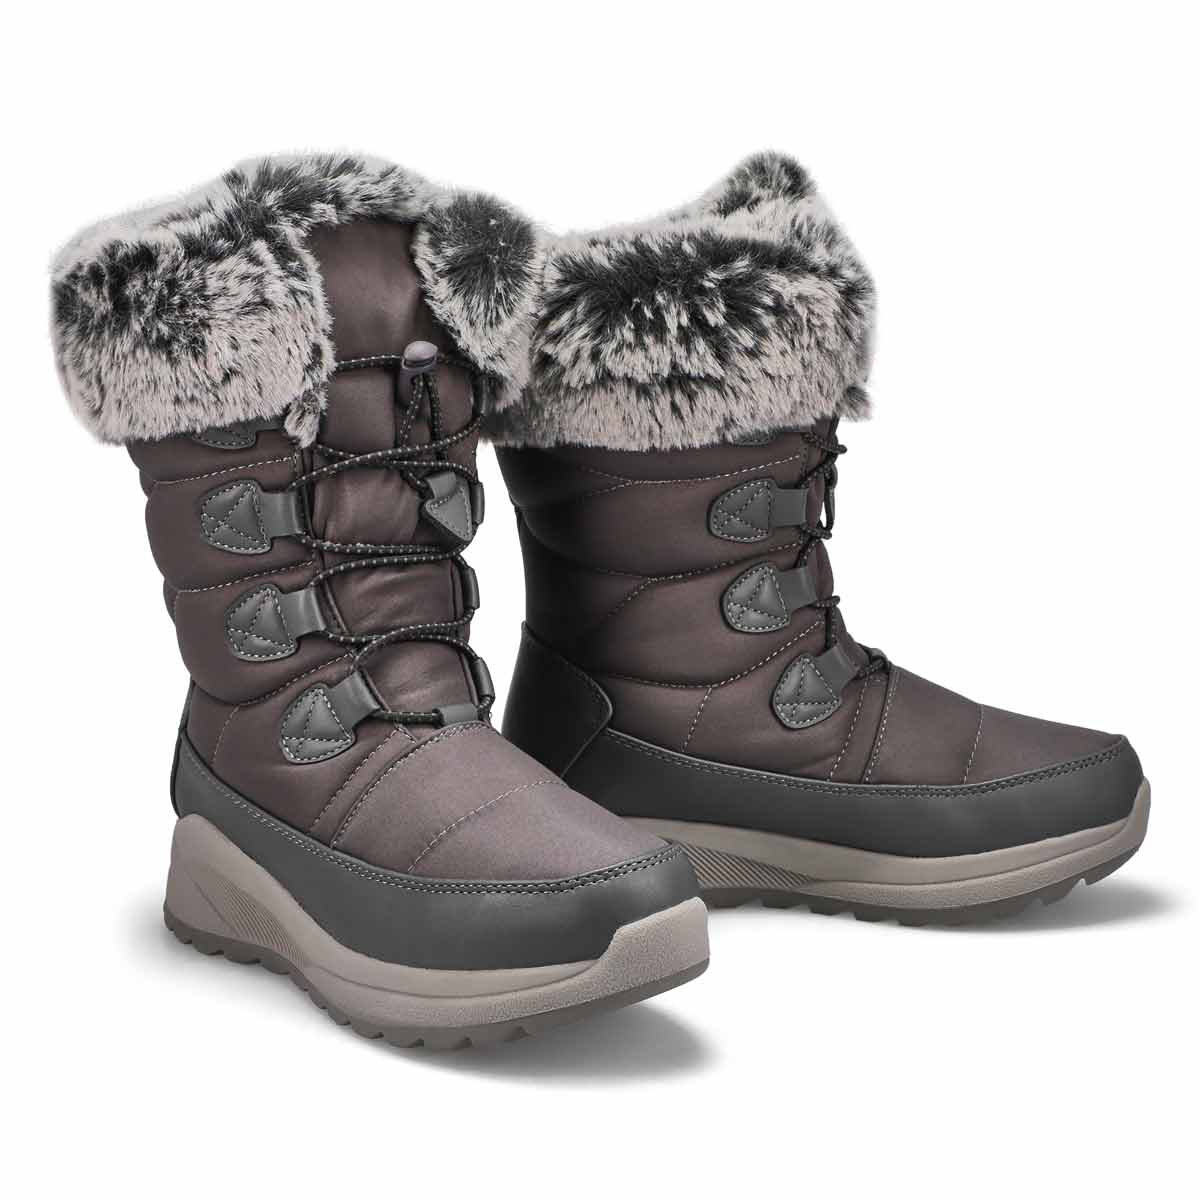 Women's Niobe Waterproof Winter Boot - Charcoal